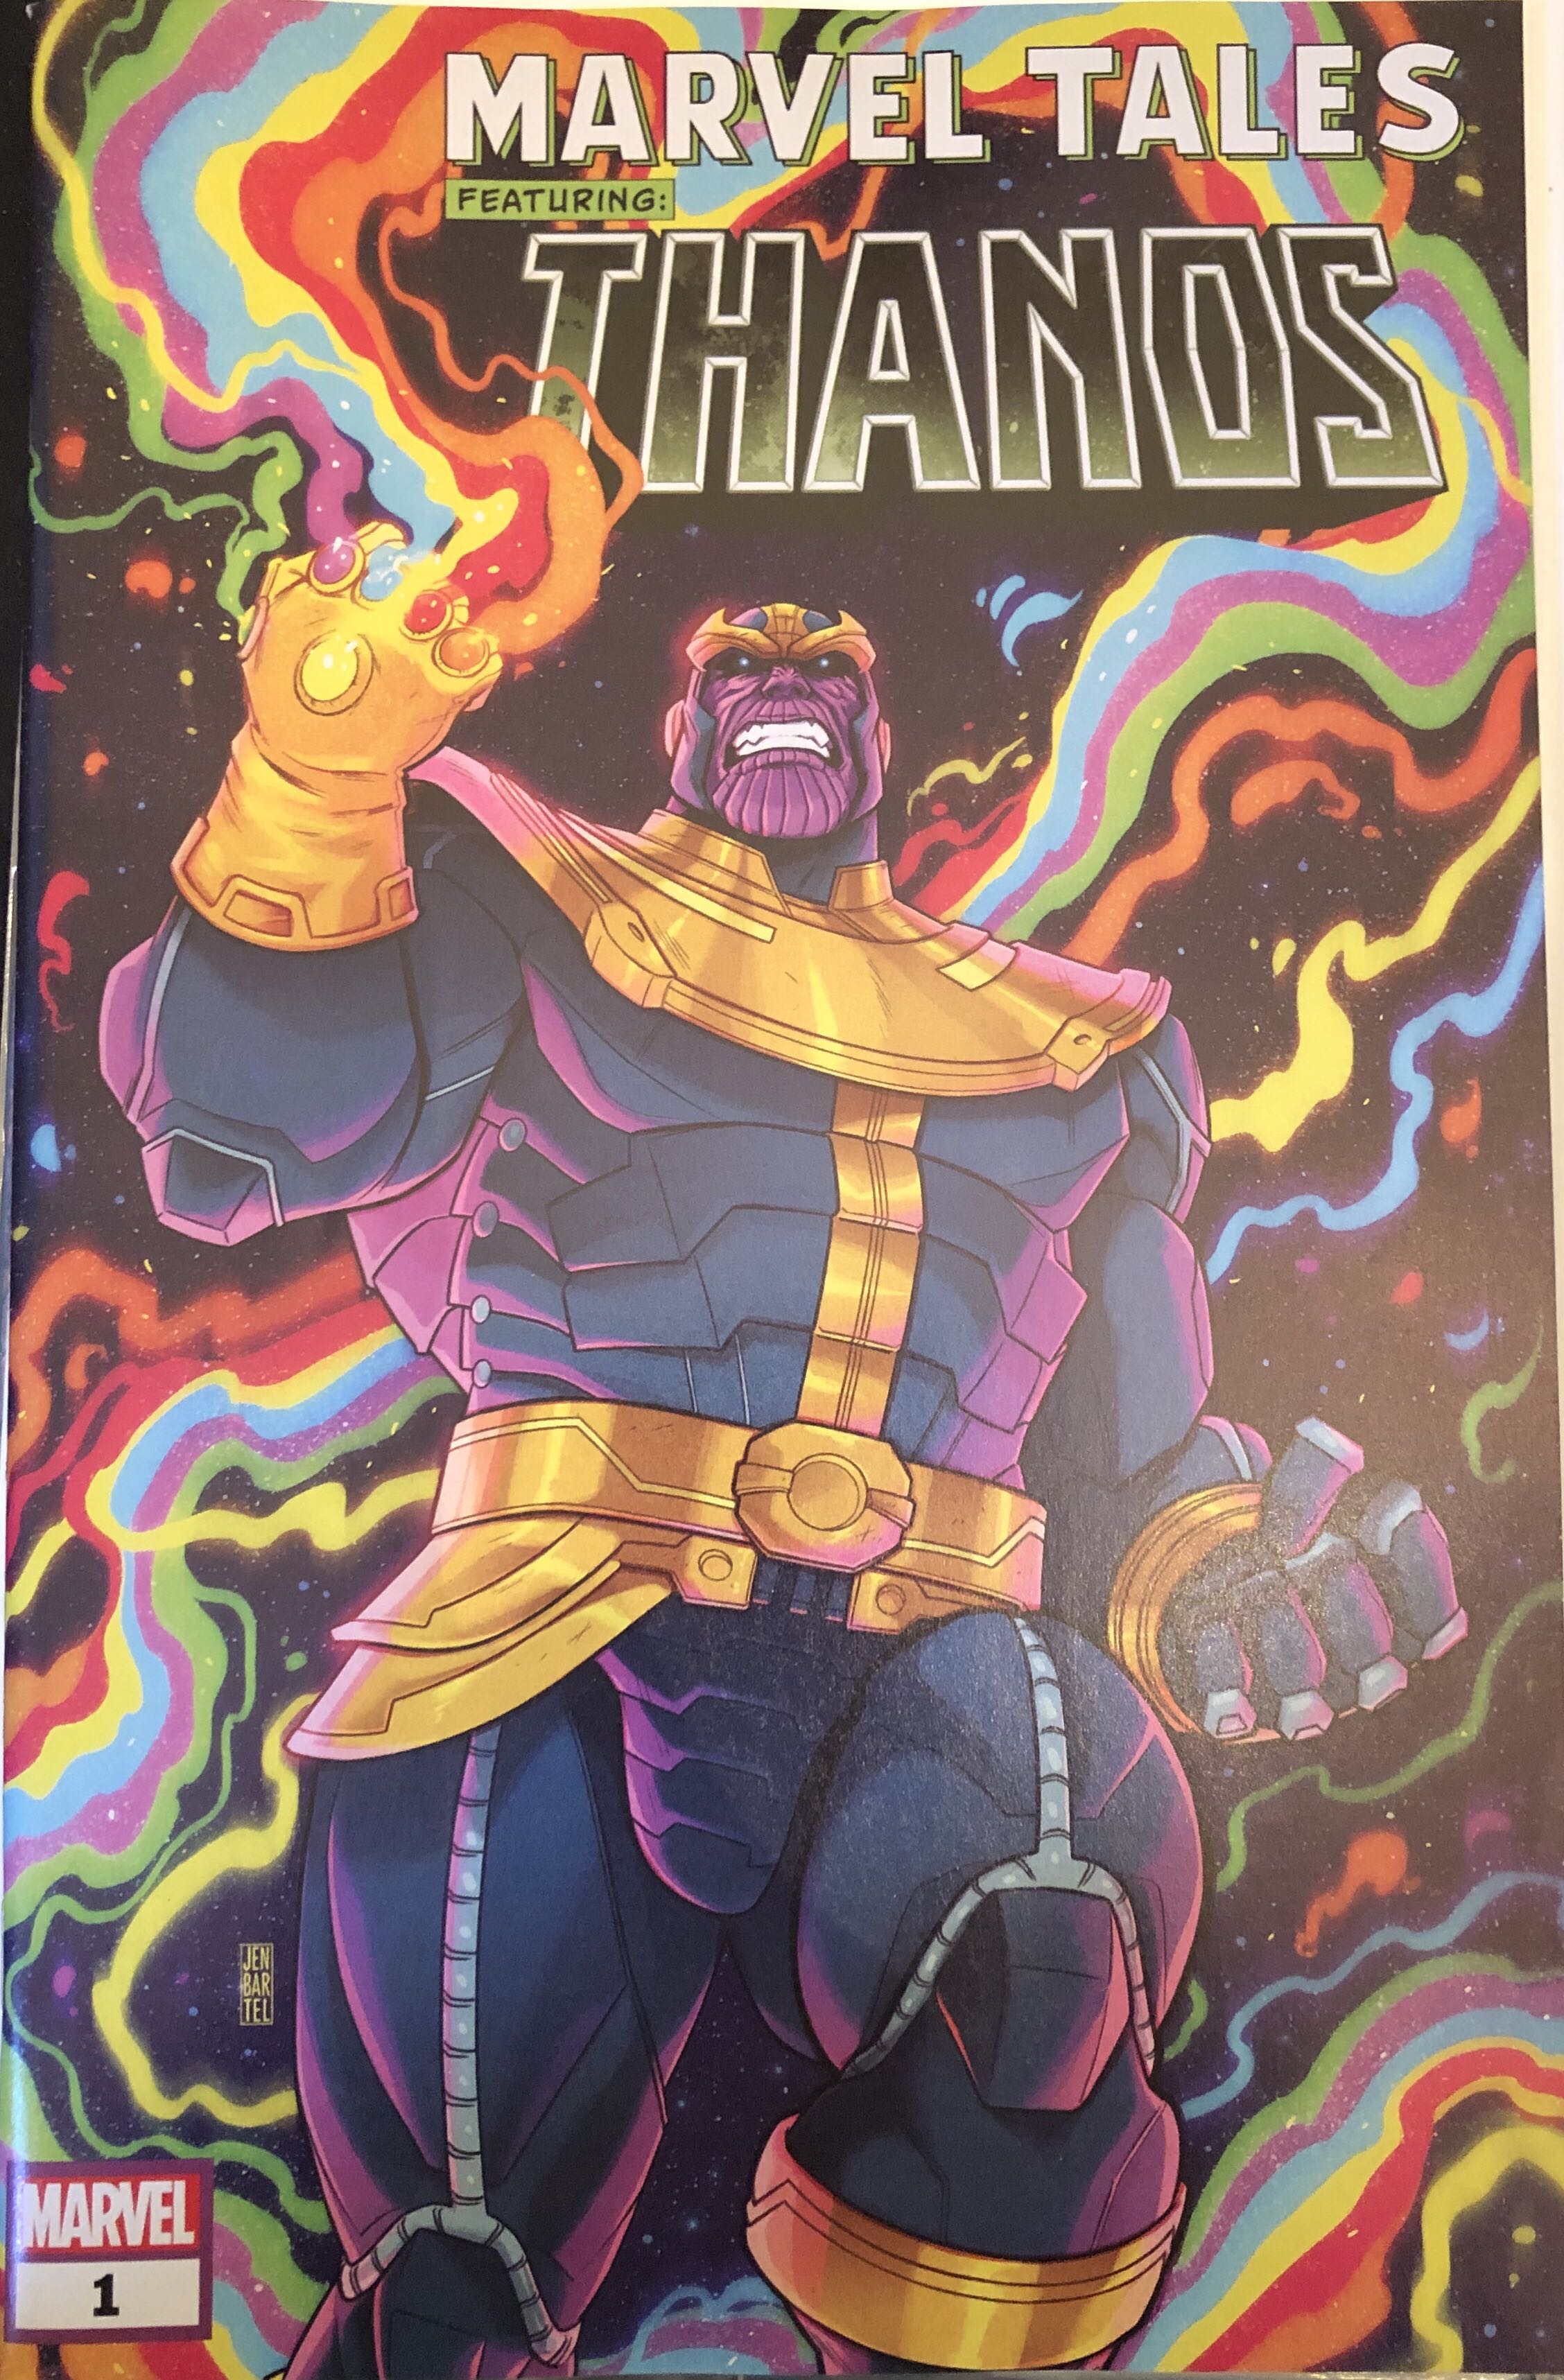 Marvel Tales: THANOS - Marvel (1 - Jun 2019) comic book collectible [Barcode 75960609375500111] - Main Image 1